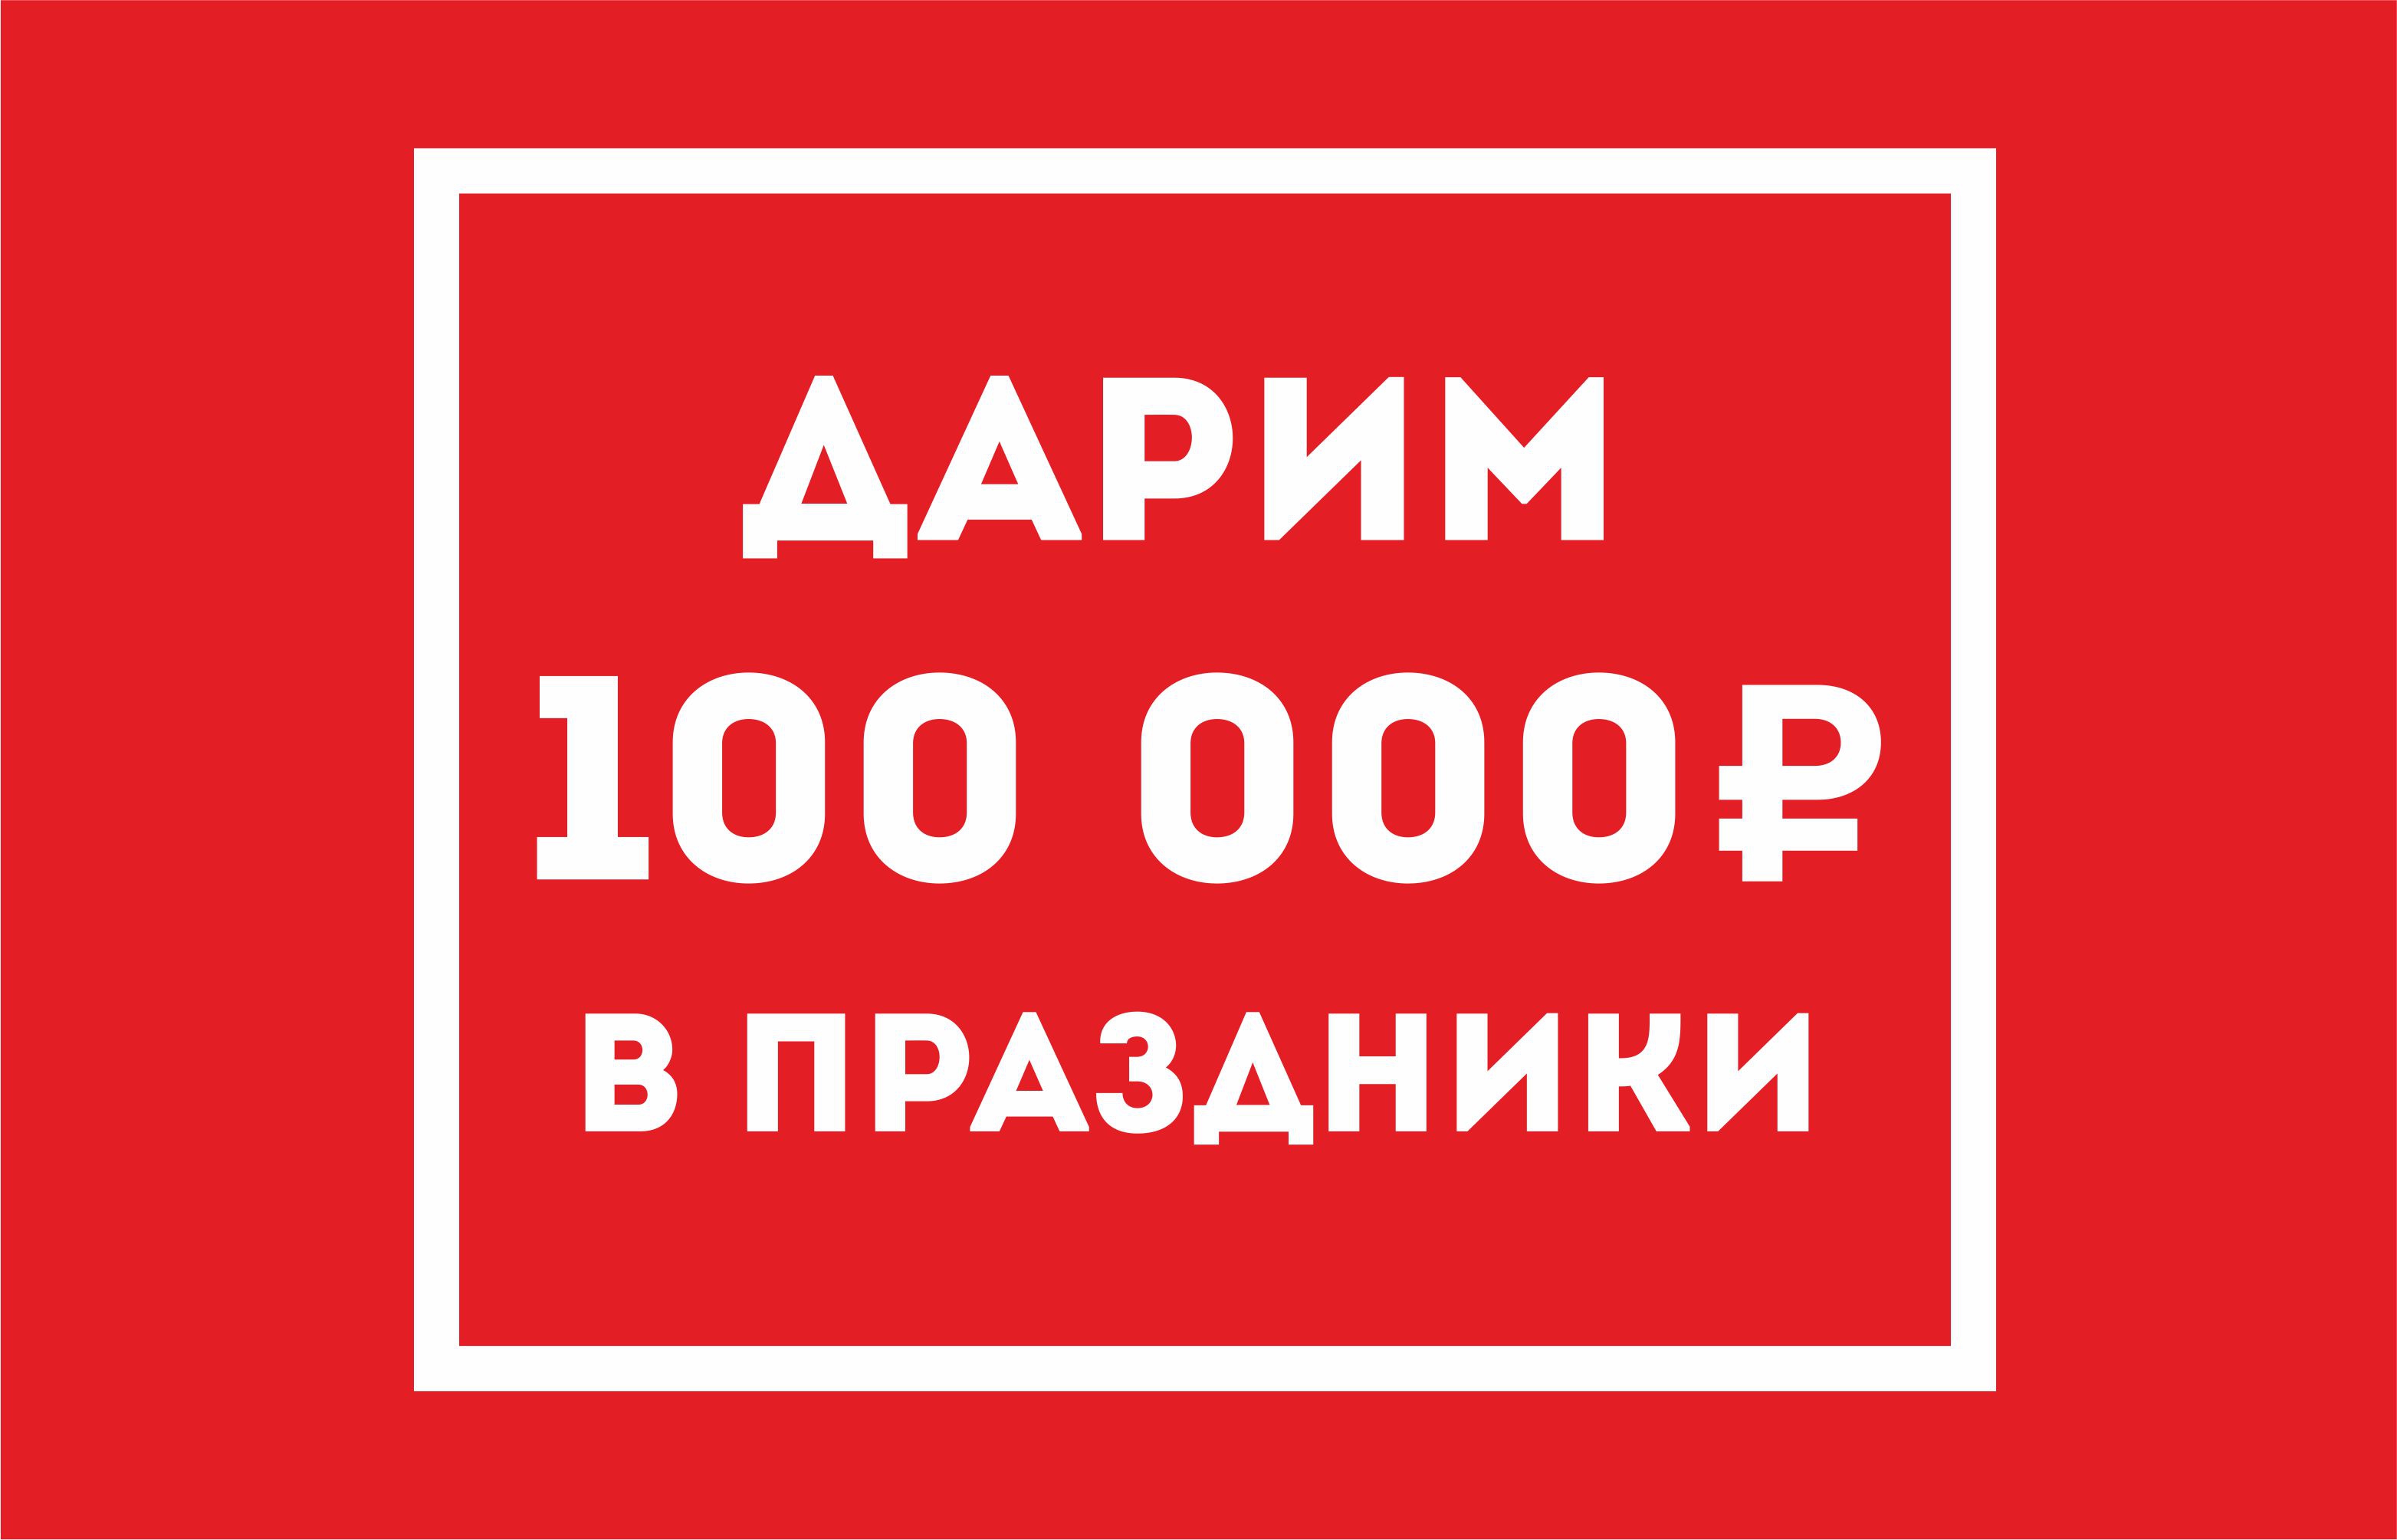 Дарим 100000 рублей